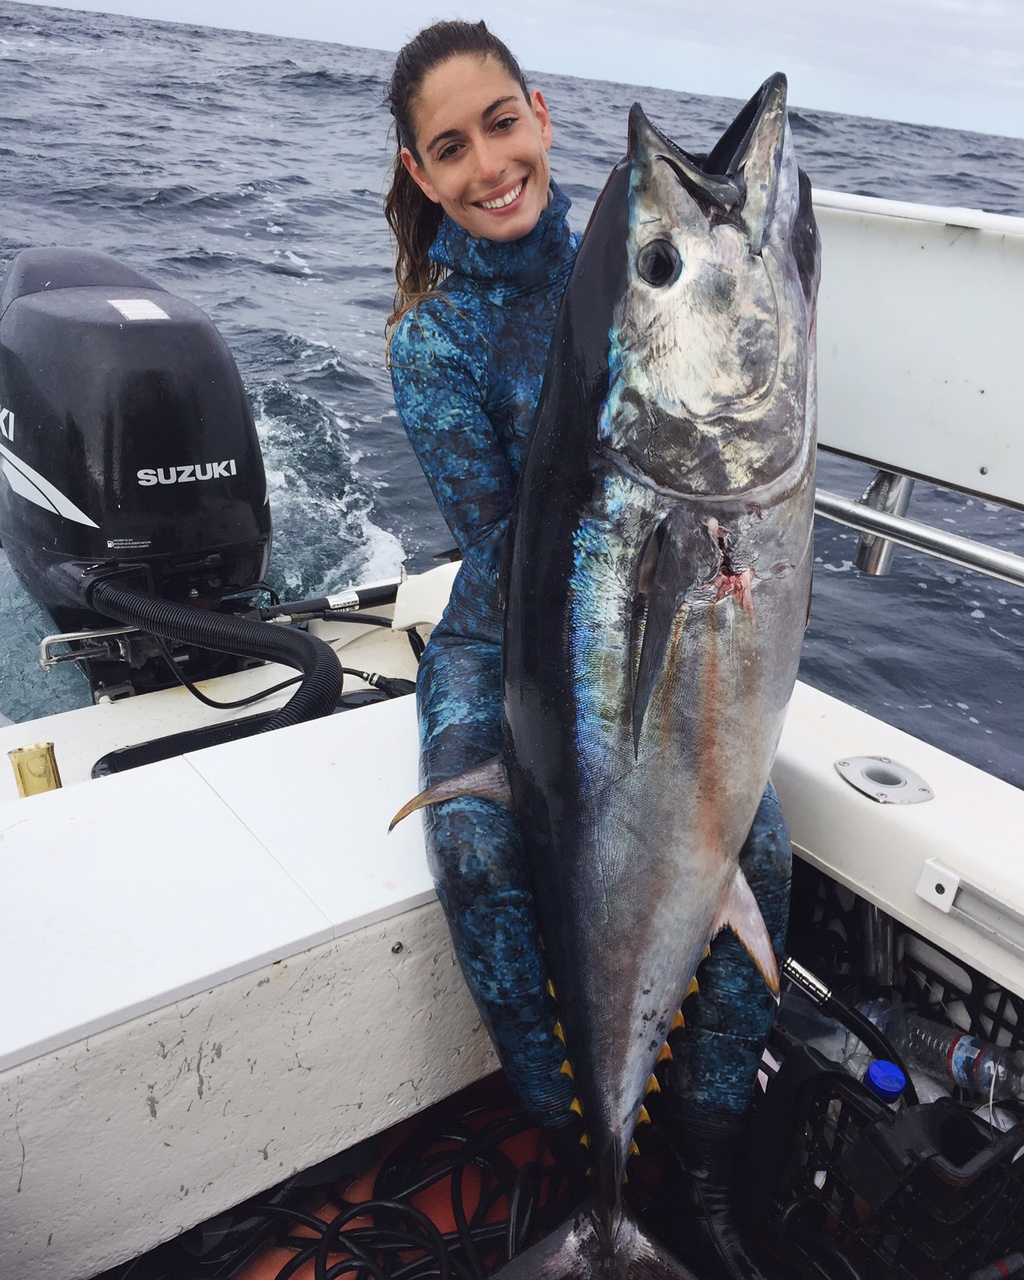 Valentine Thomas with a Southern California bluefin tuna. (VALENTINE THIOMAS) 